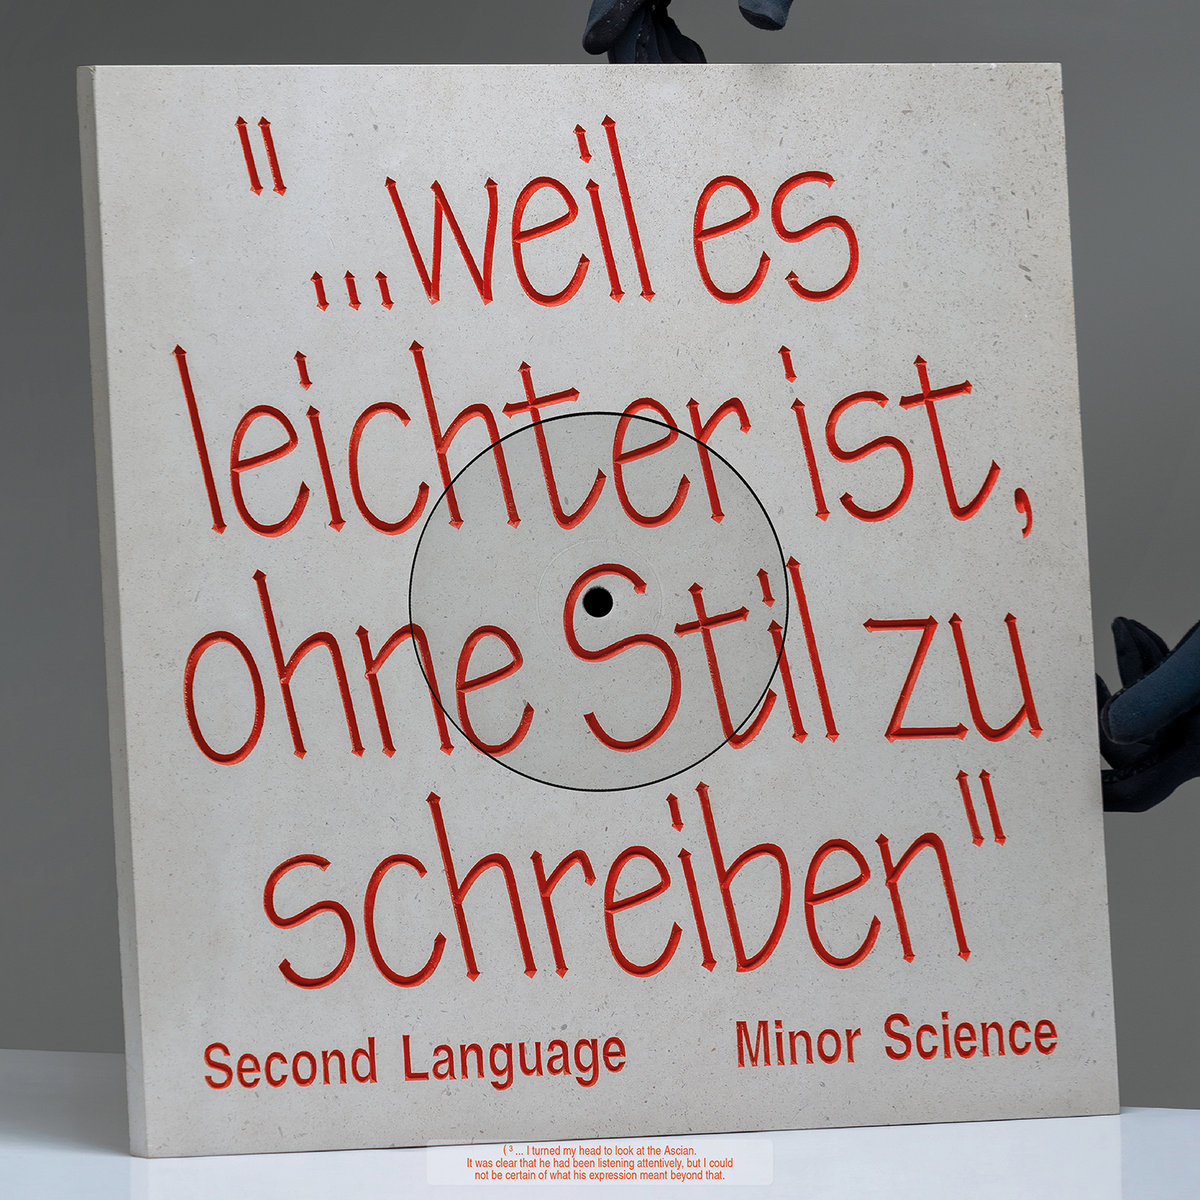 Minor Science – Second Language